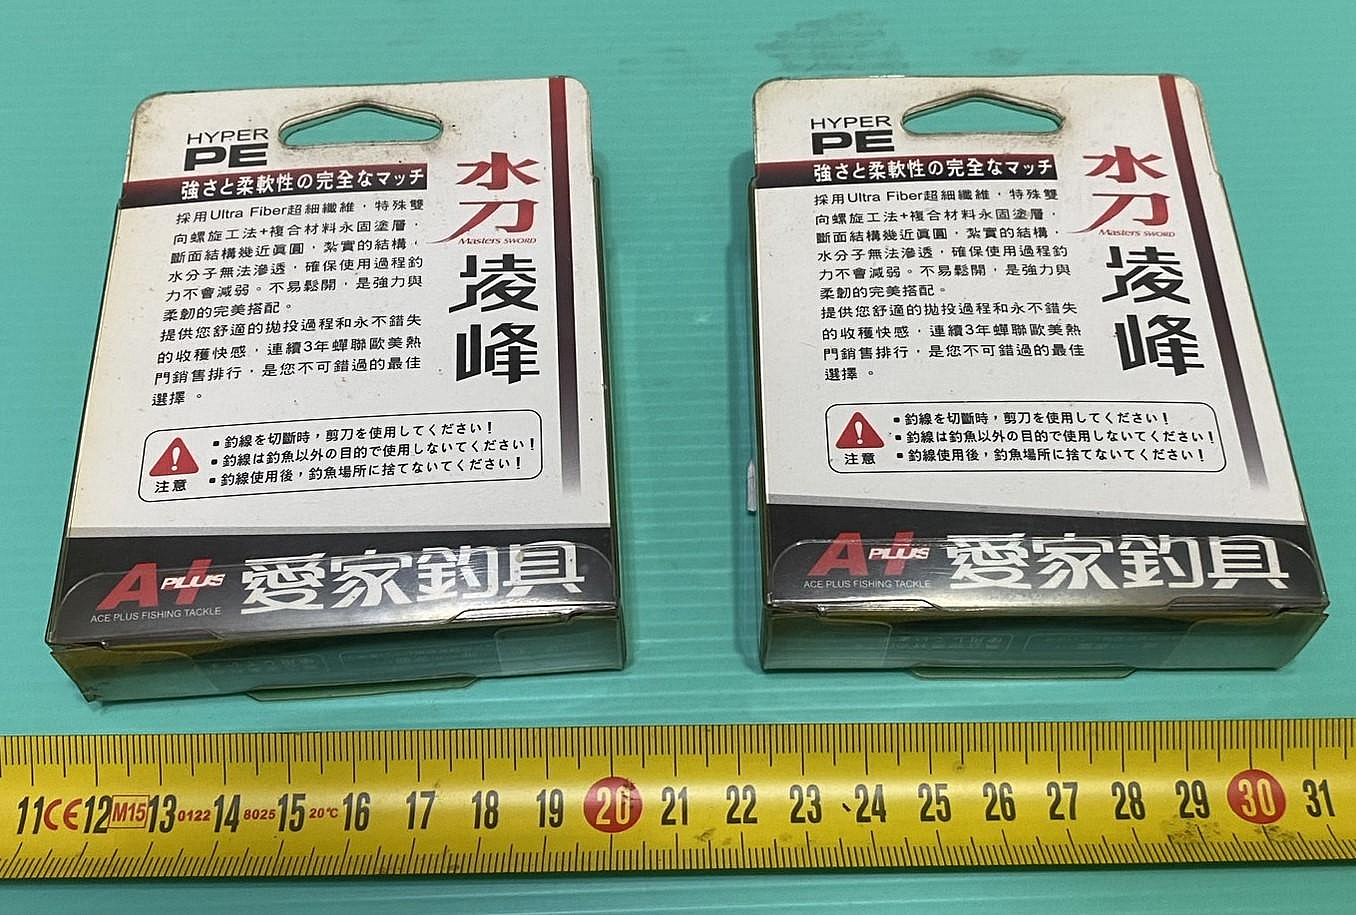 A+ PLUS 愛家釣具 凌峰 水刀PE線 日本二手外匯精品釣具 編號D57